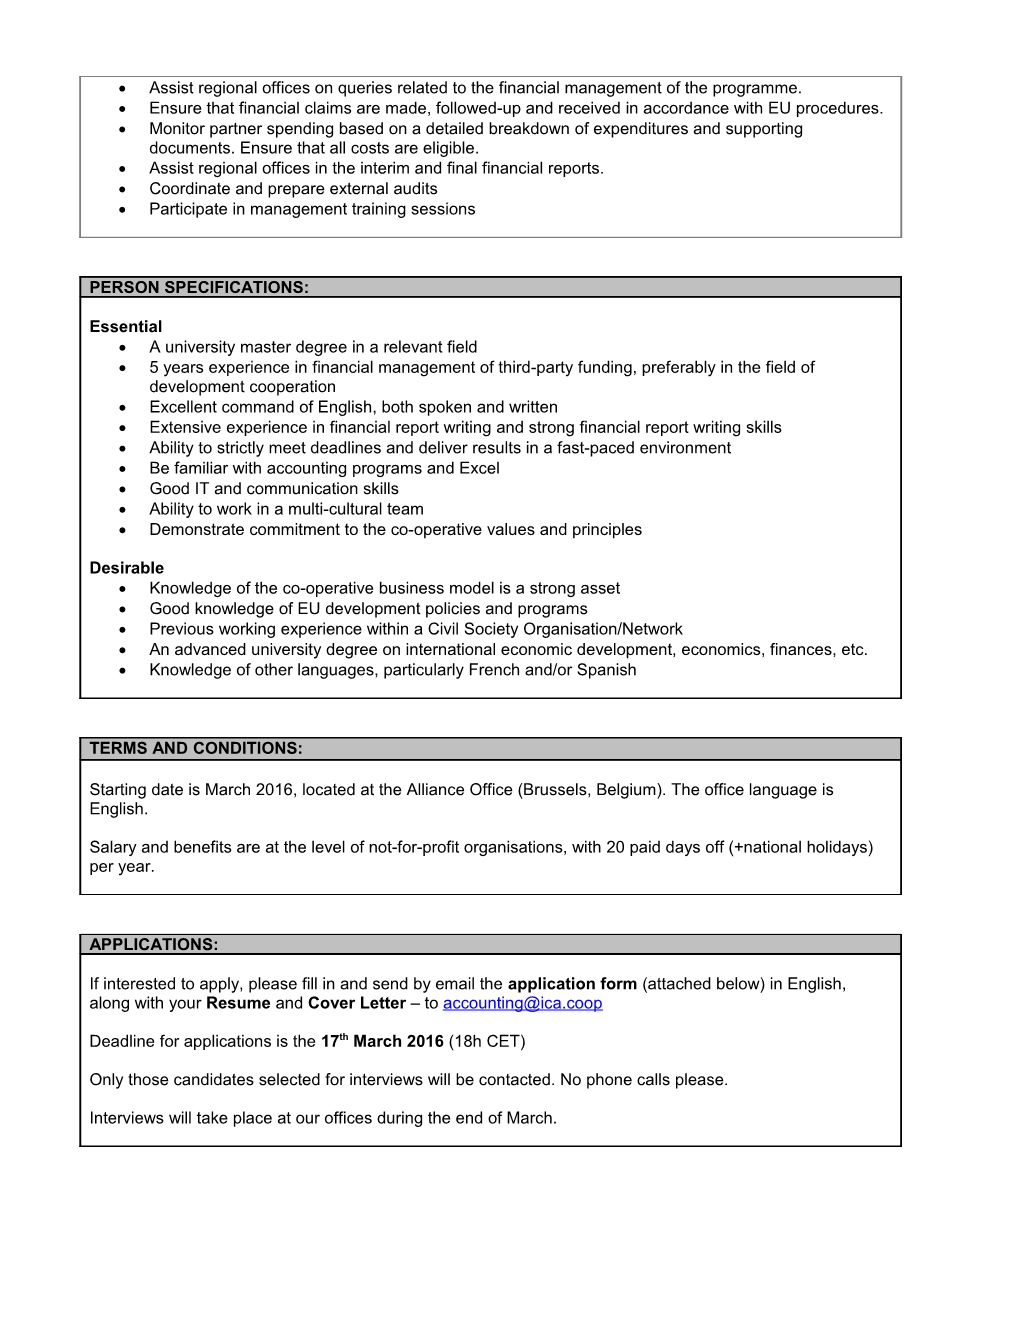 Job Advertisement & Application Form